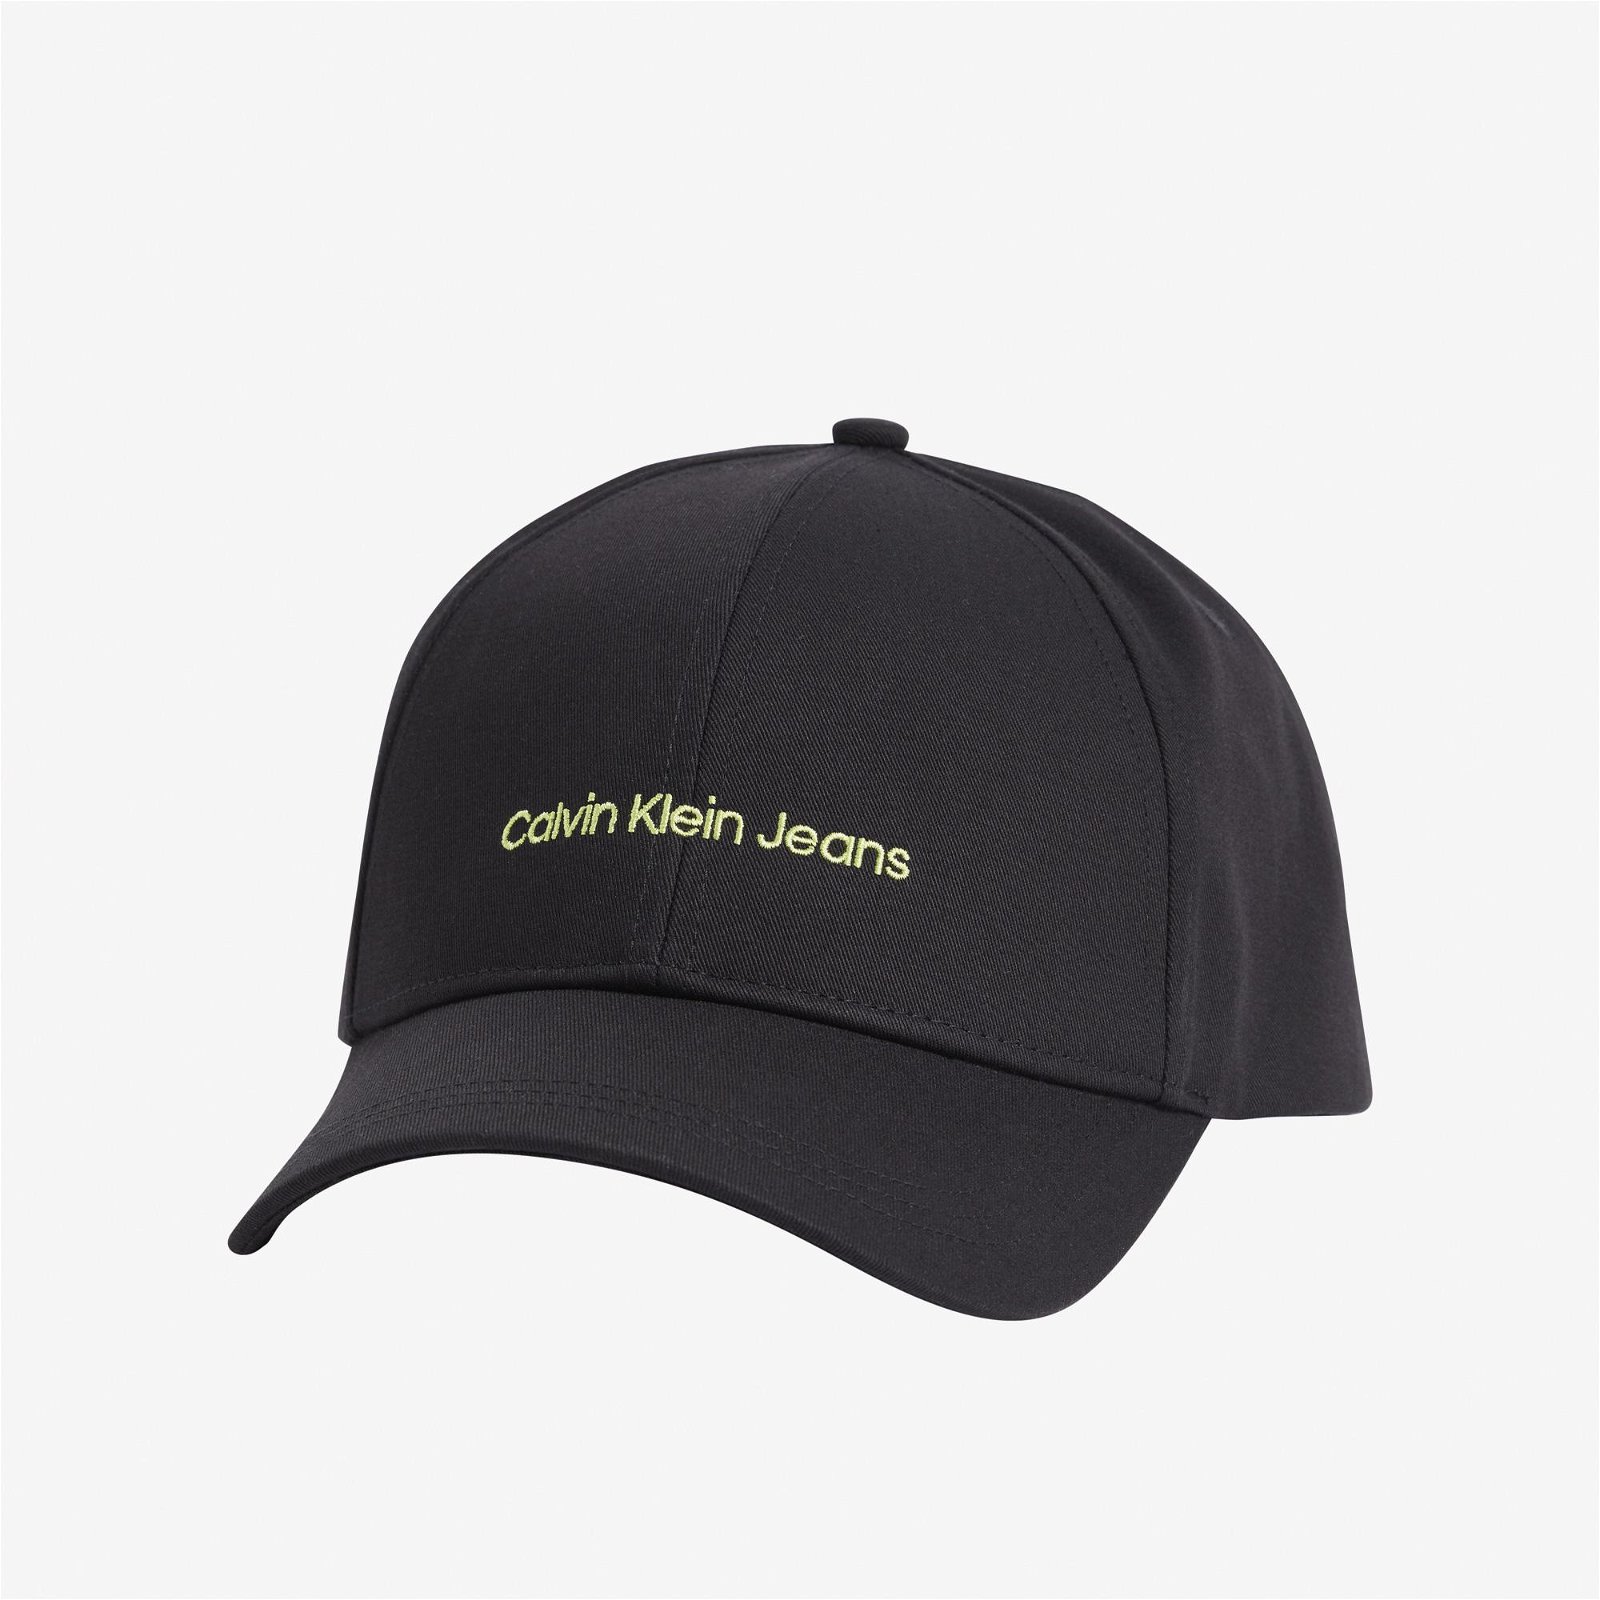 Calvin Klein Jeans Institutionalnew Erkek Siyah Şapka